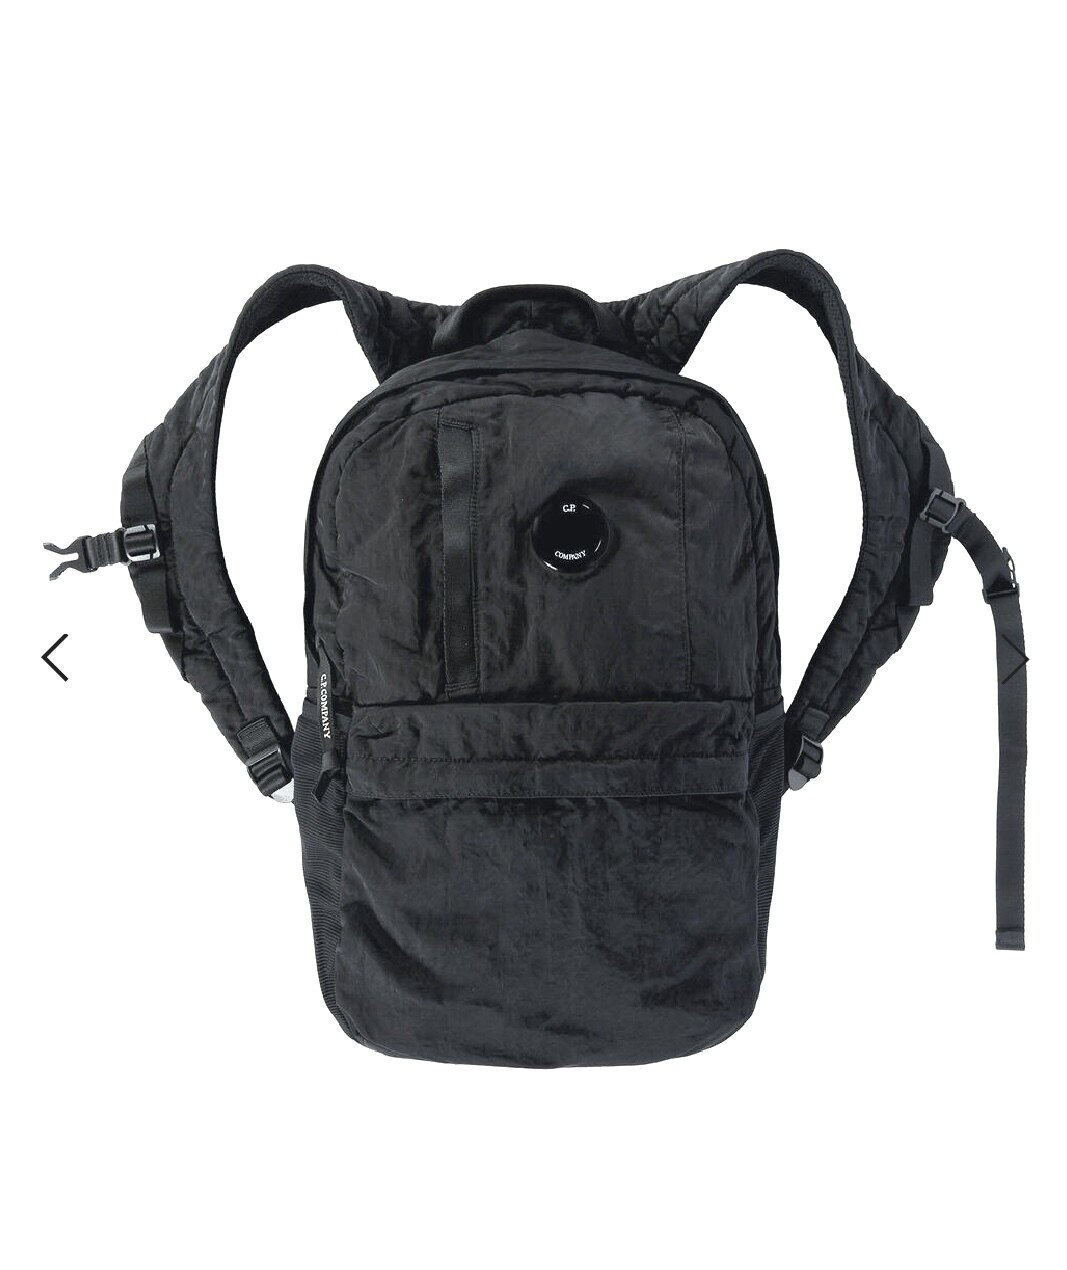 Zaino backpack in nylon weather resistant, spalline imbottite regolabili